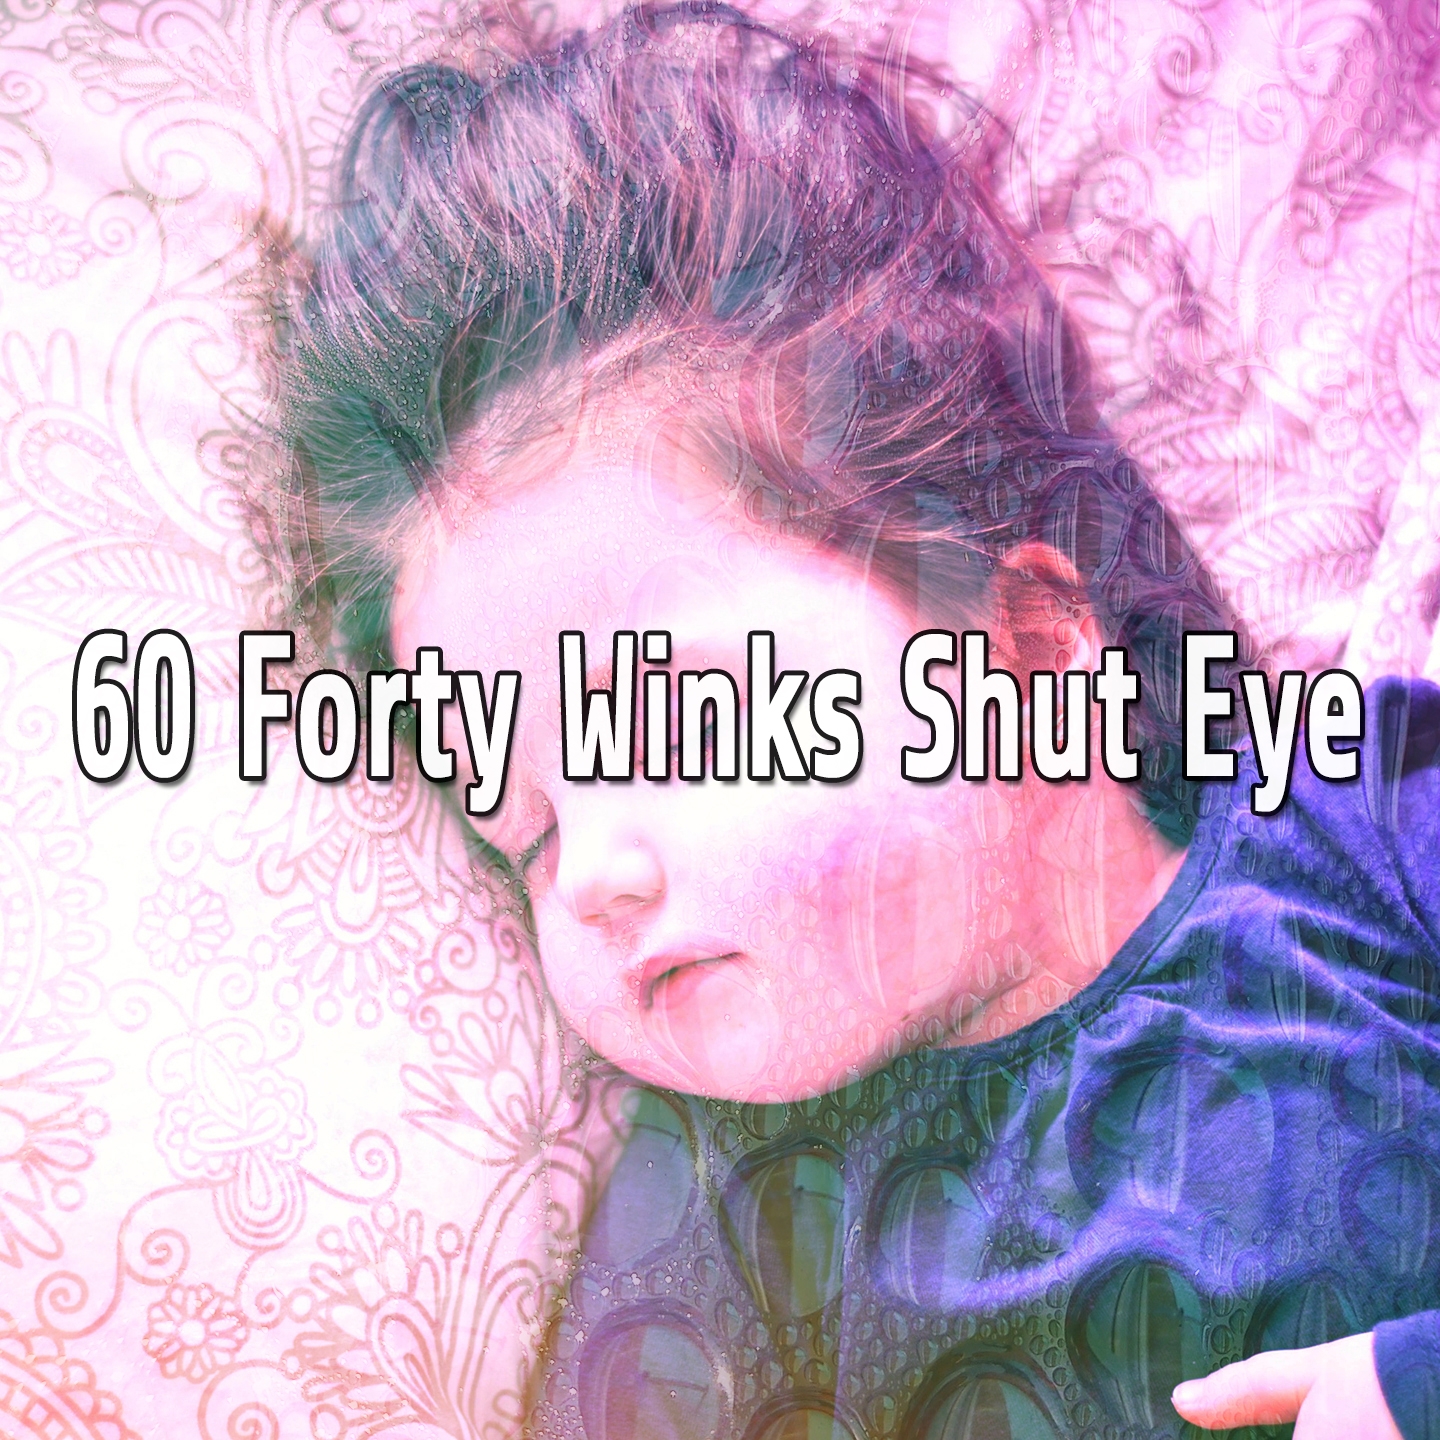 60 Forty Winks Shut Eye